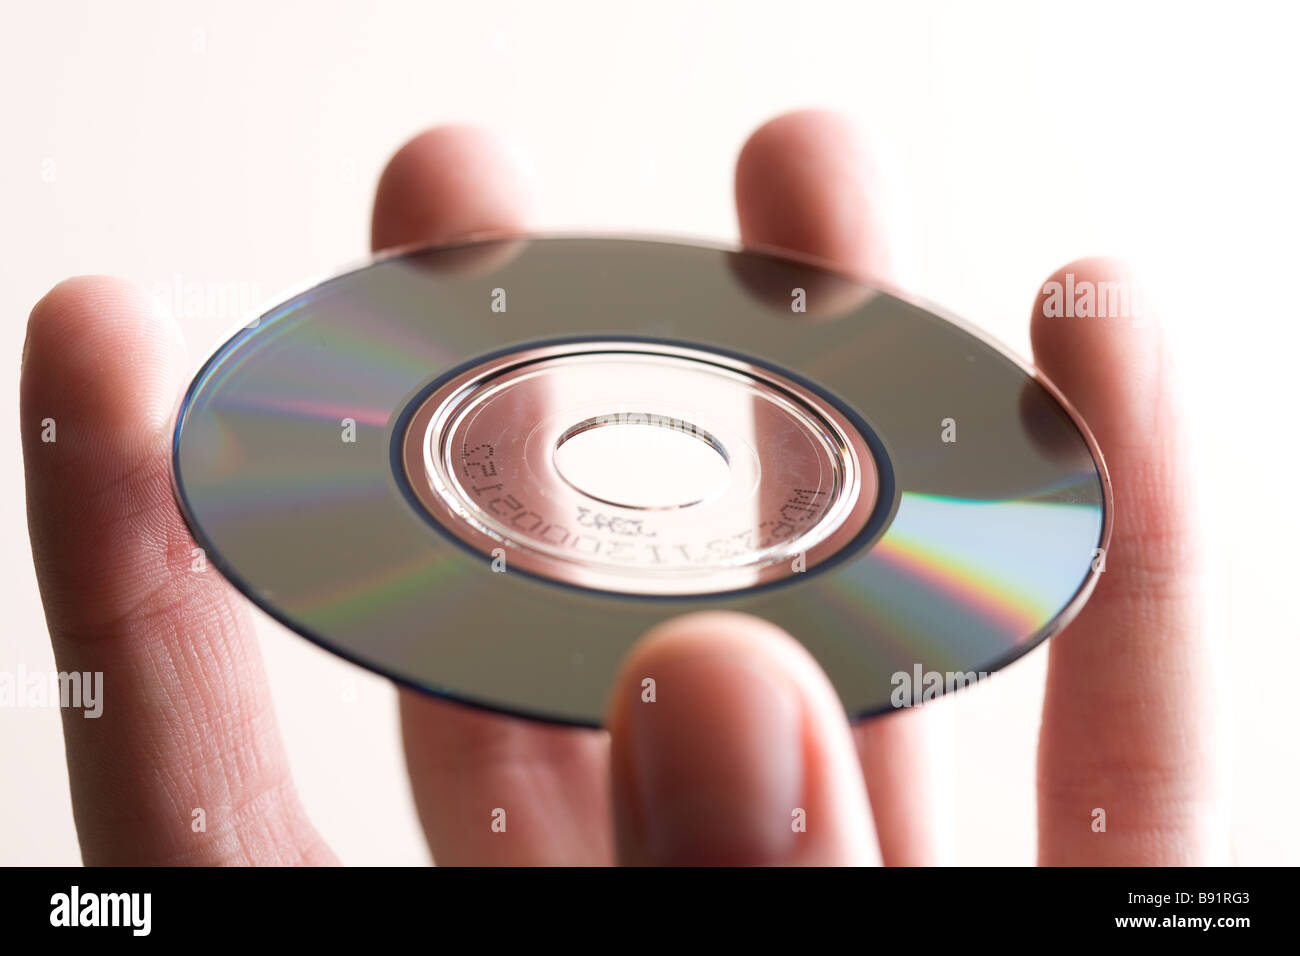 dvd, cd, mini, disc, hand, wrist, data, database, disk, harddrive Stock  Photo - Alamy